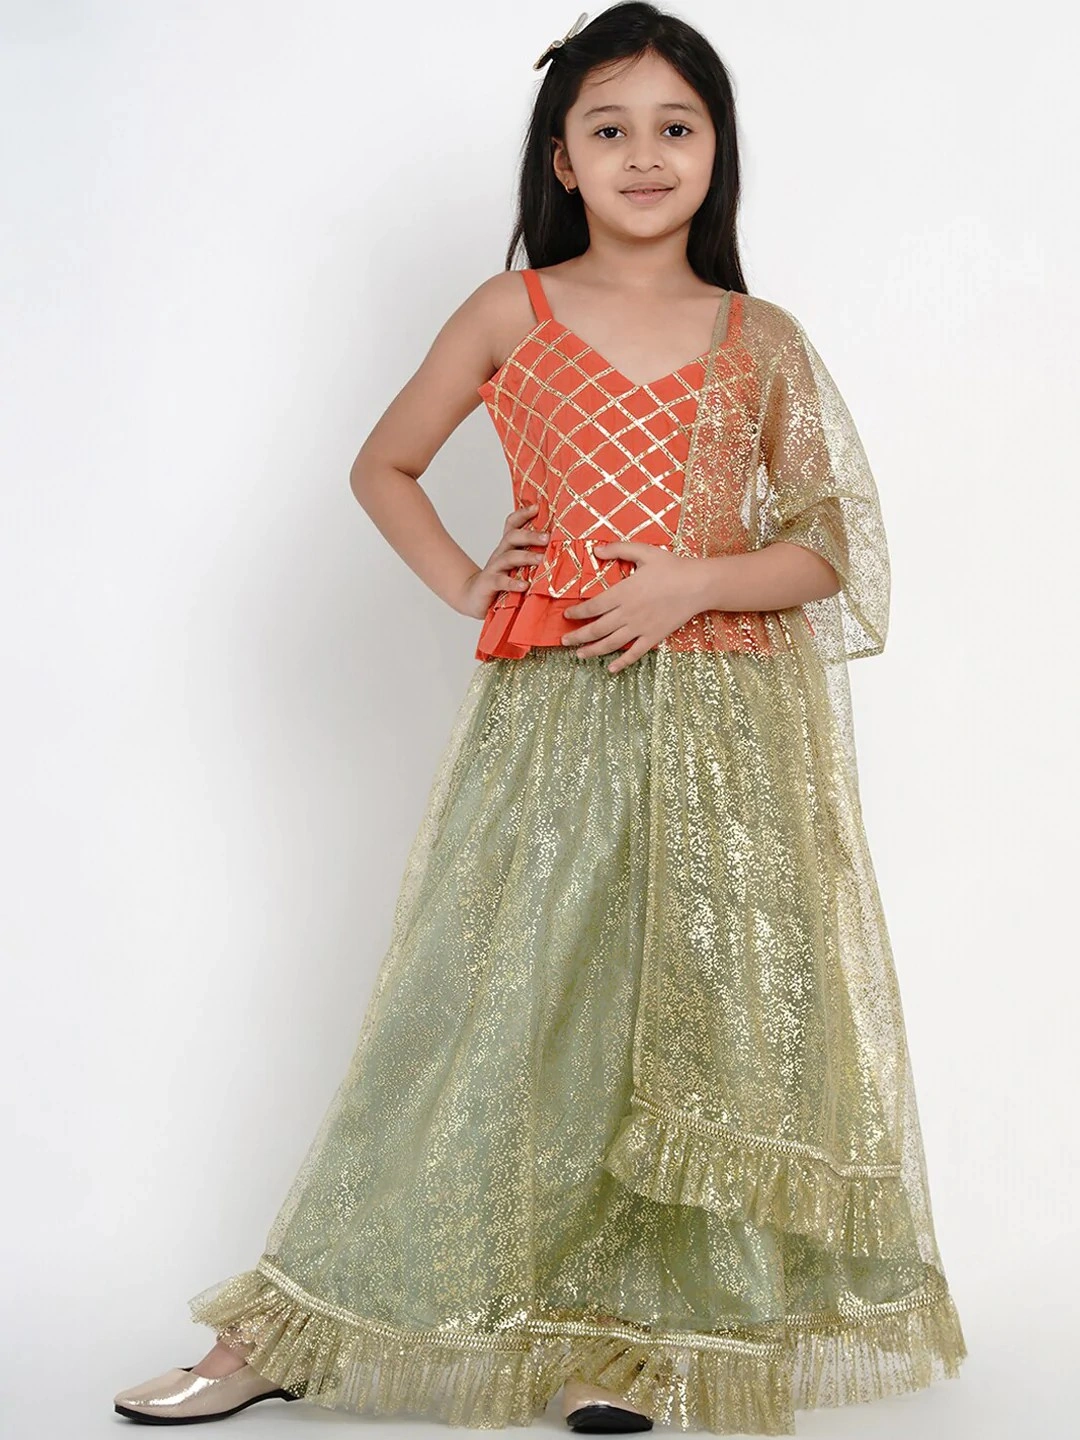 Bitiya by Bhama Girls Green &amp; Peach-Coloured Embellished Ready to Wear Lehenga &amp; Blouse with Dupatta-BBB166_7-8Y